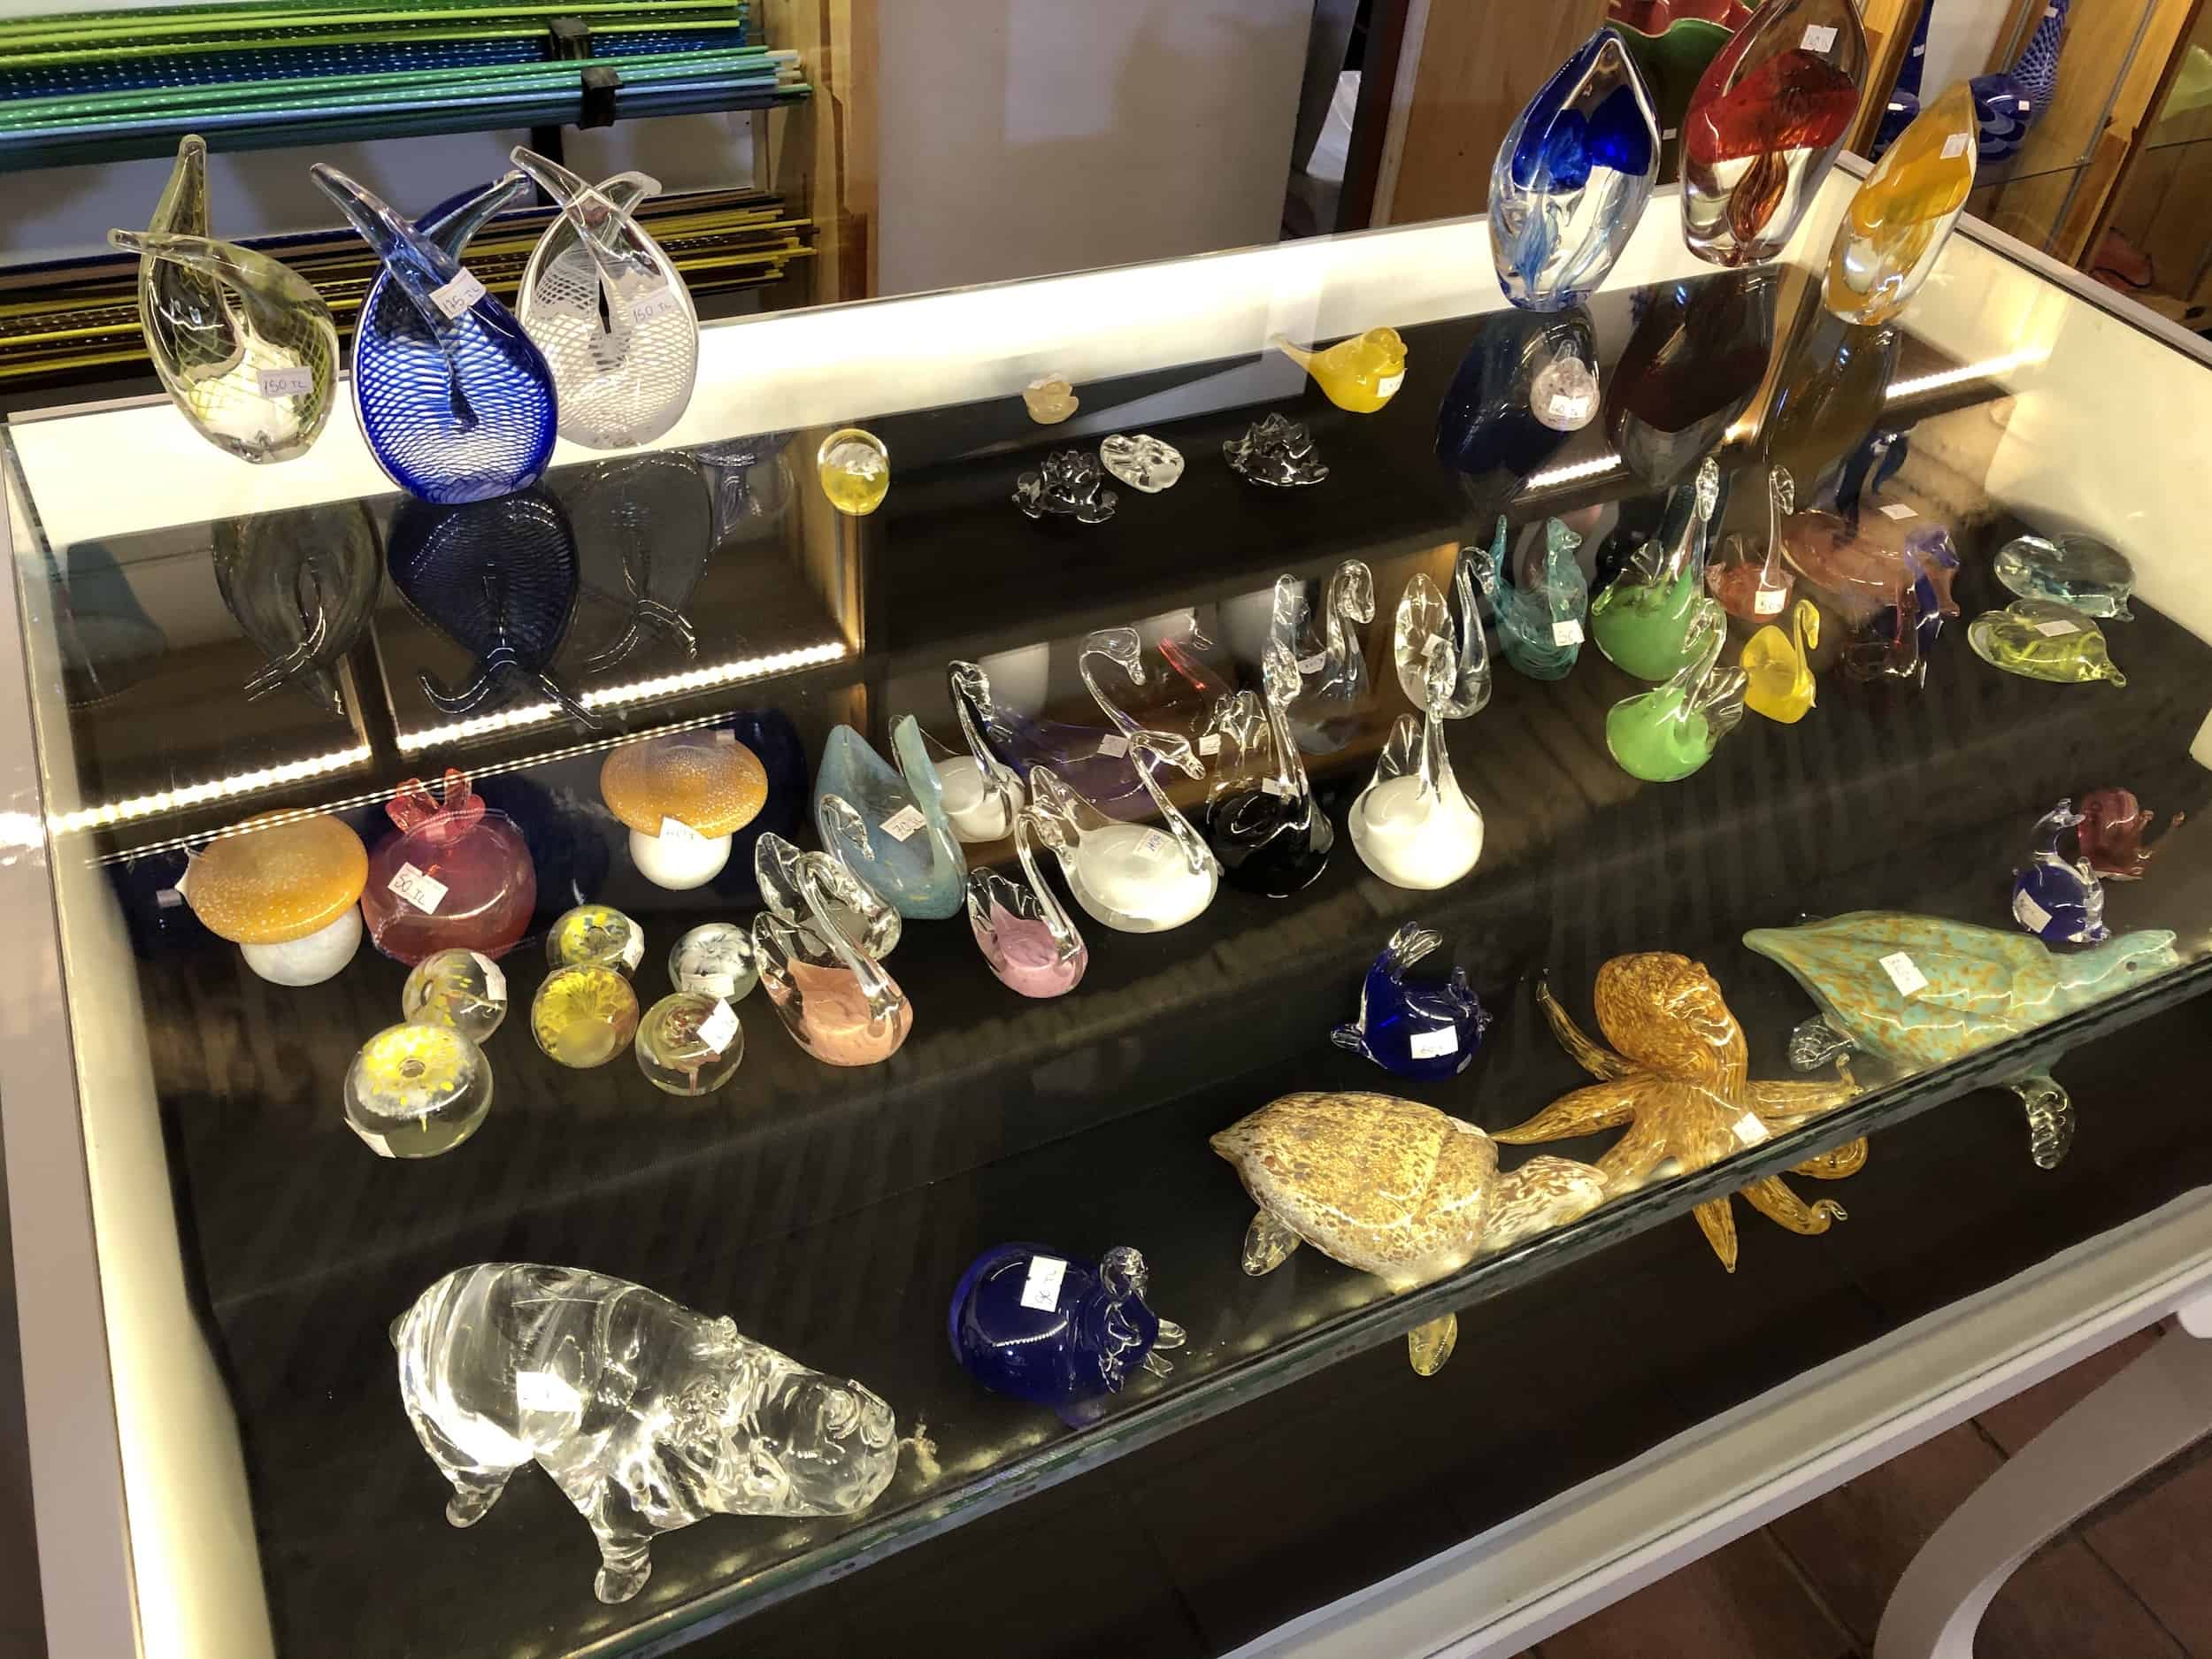 Glass items